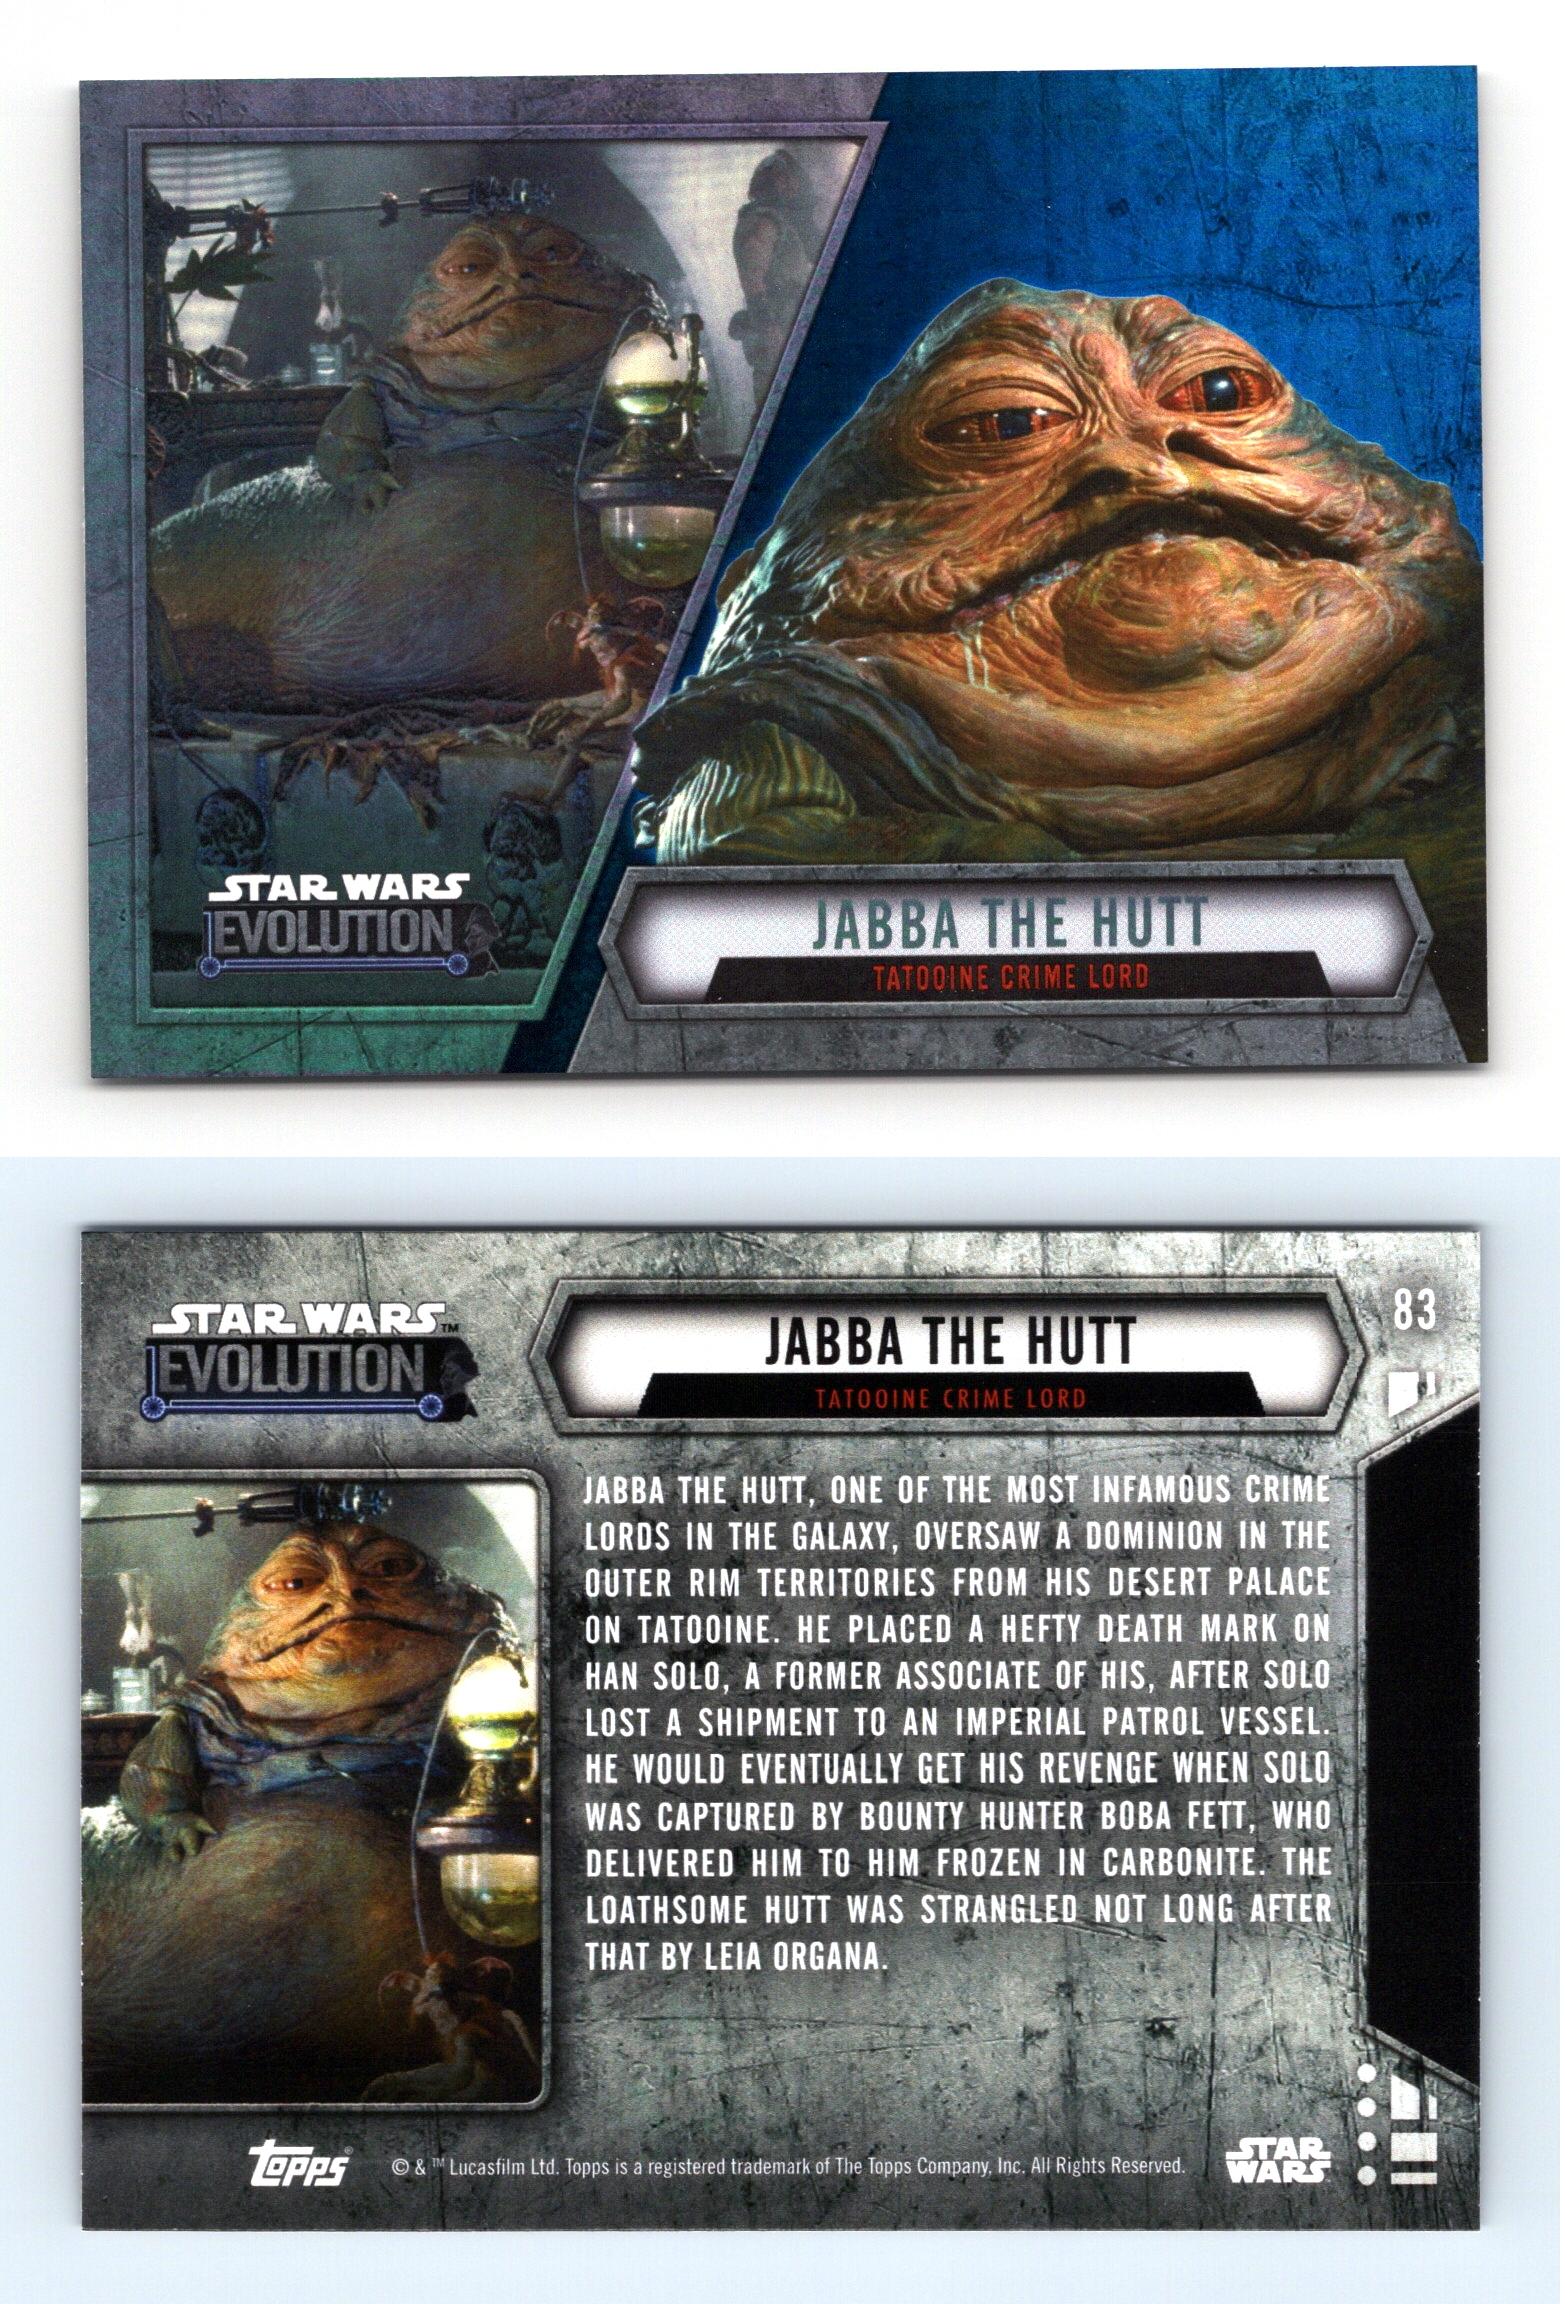 2016 Topps Star Wars Evolution Card #83 Jabba the Hutt Tatooine Crime Lord